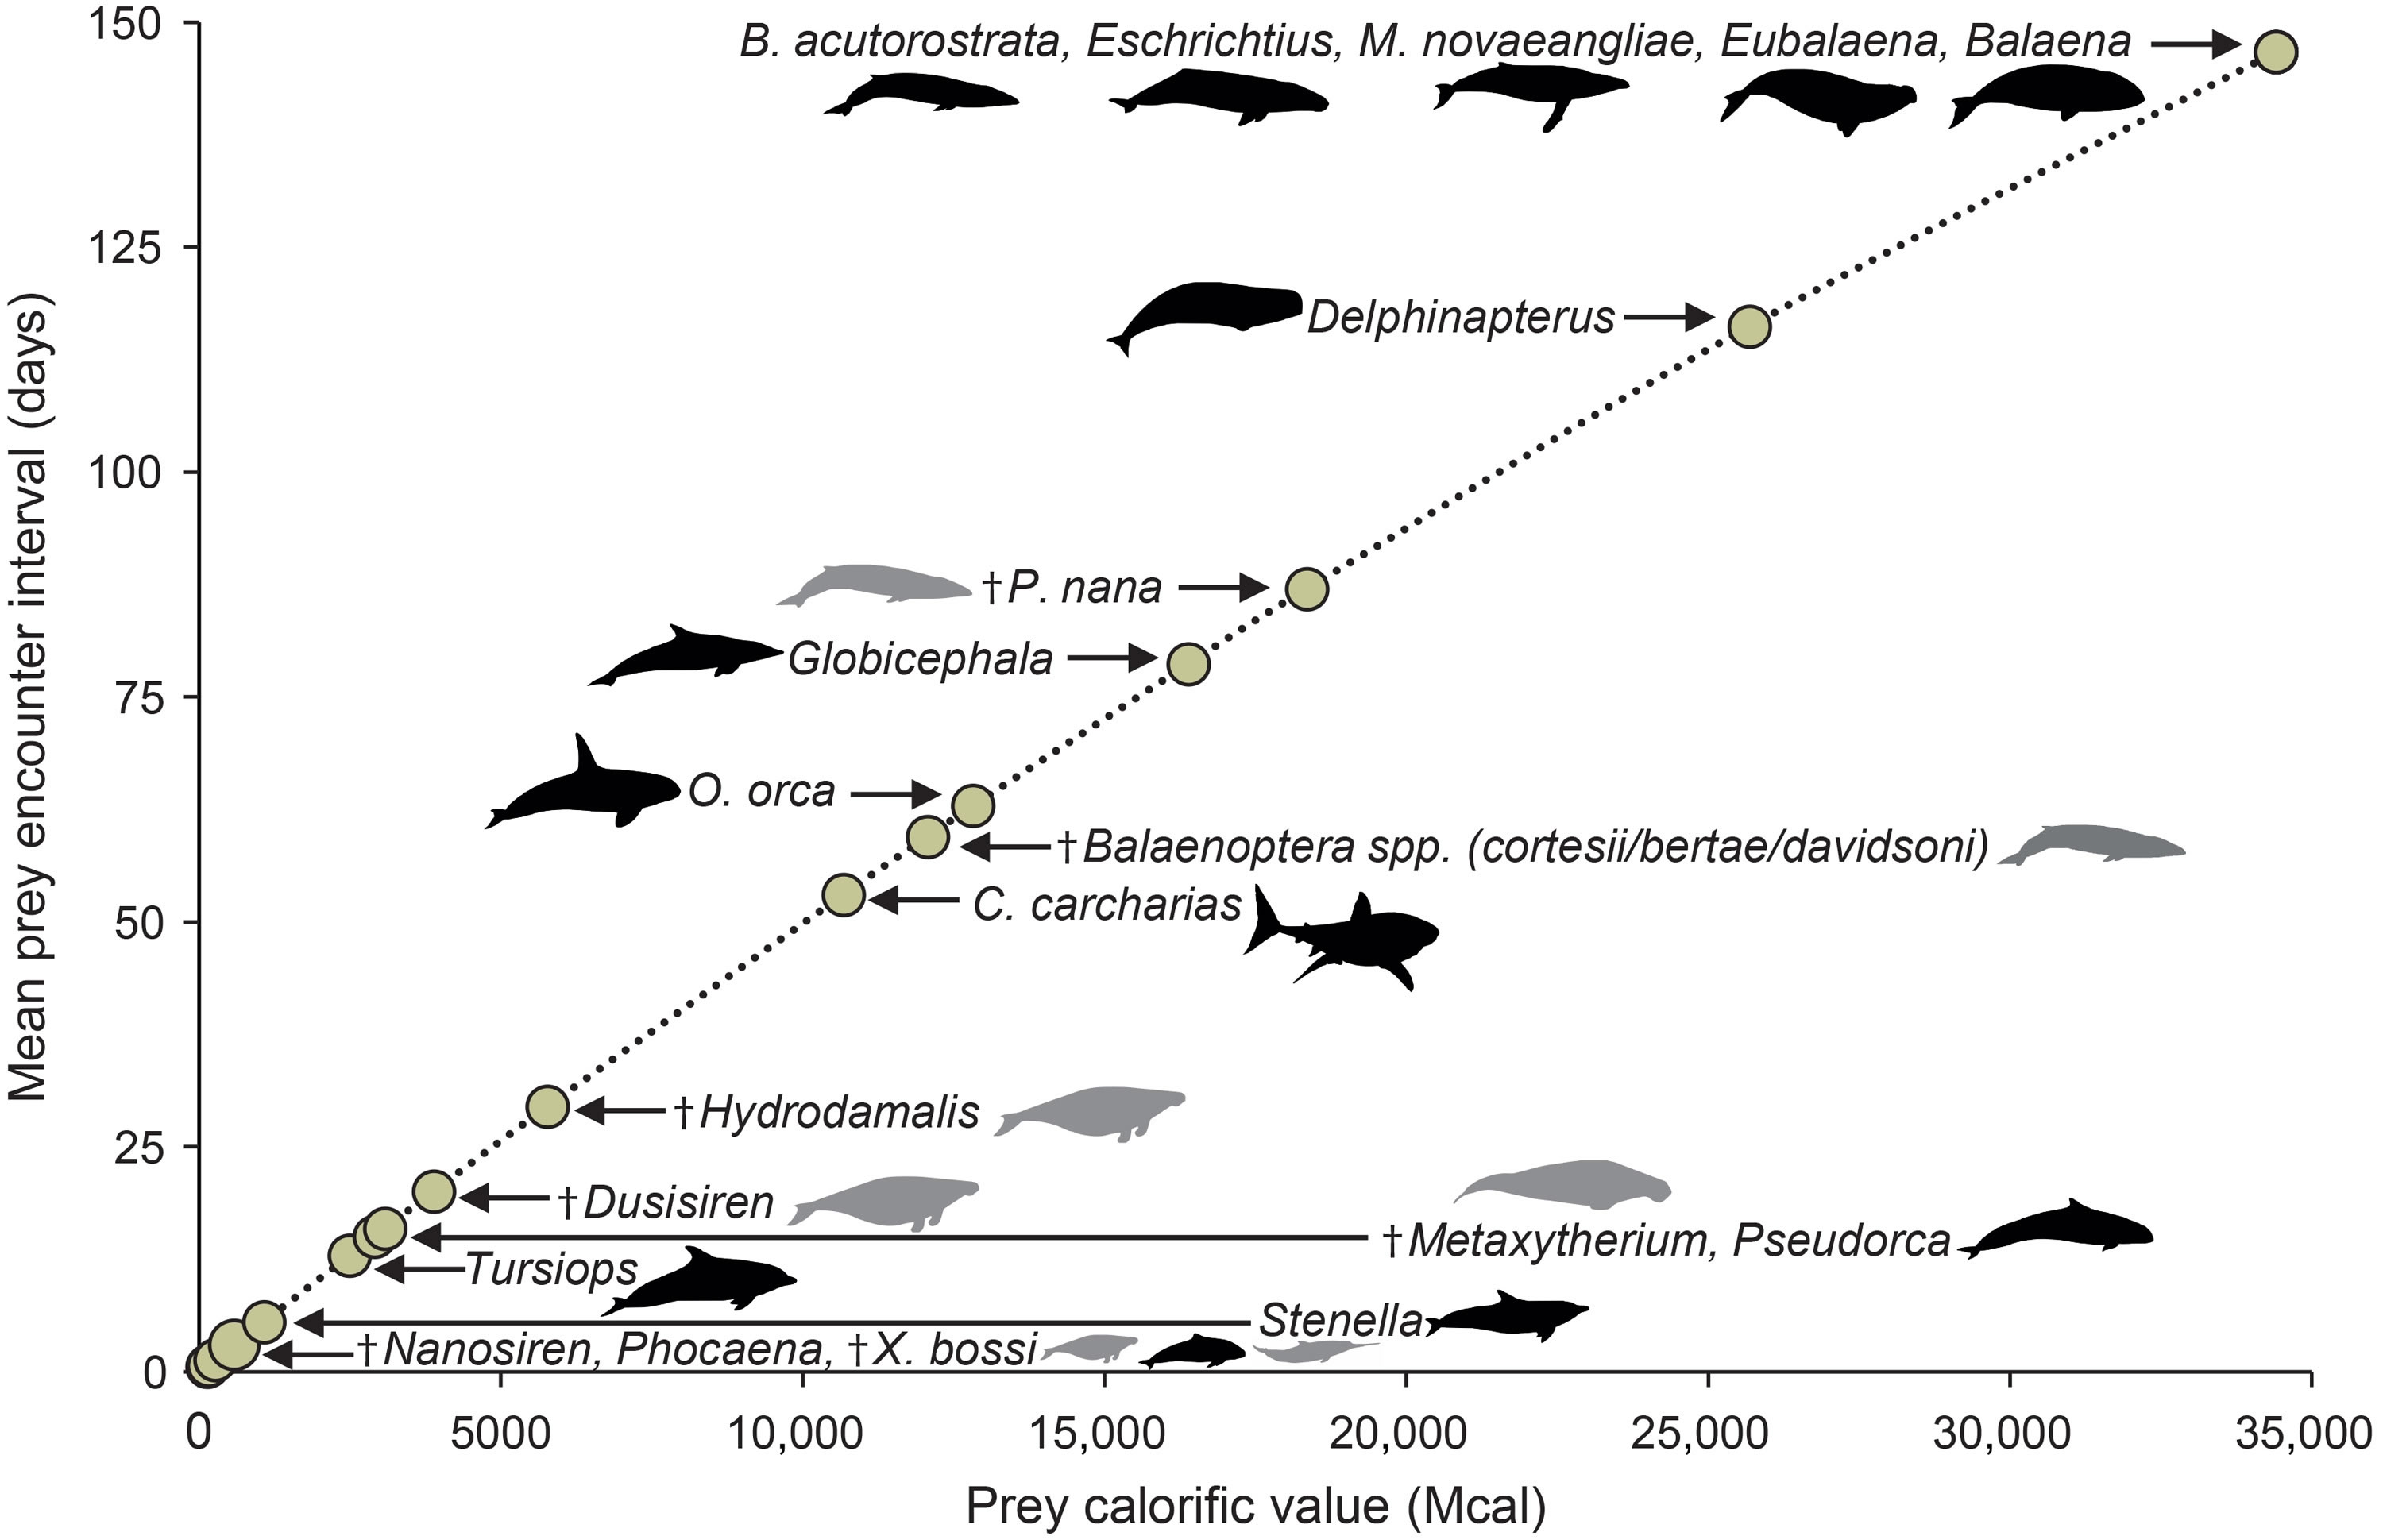 3D模型表明史前巨齿鲨只需五口就能吃掉一头虎鲸